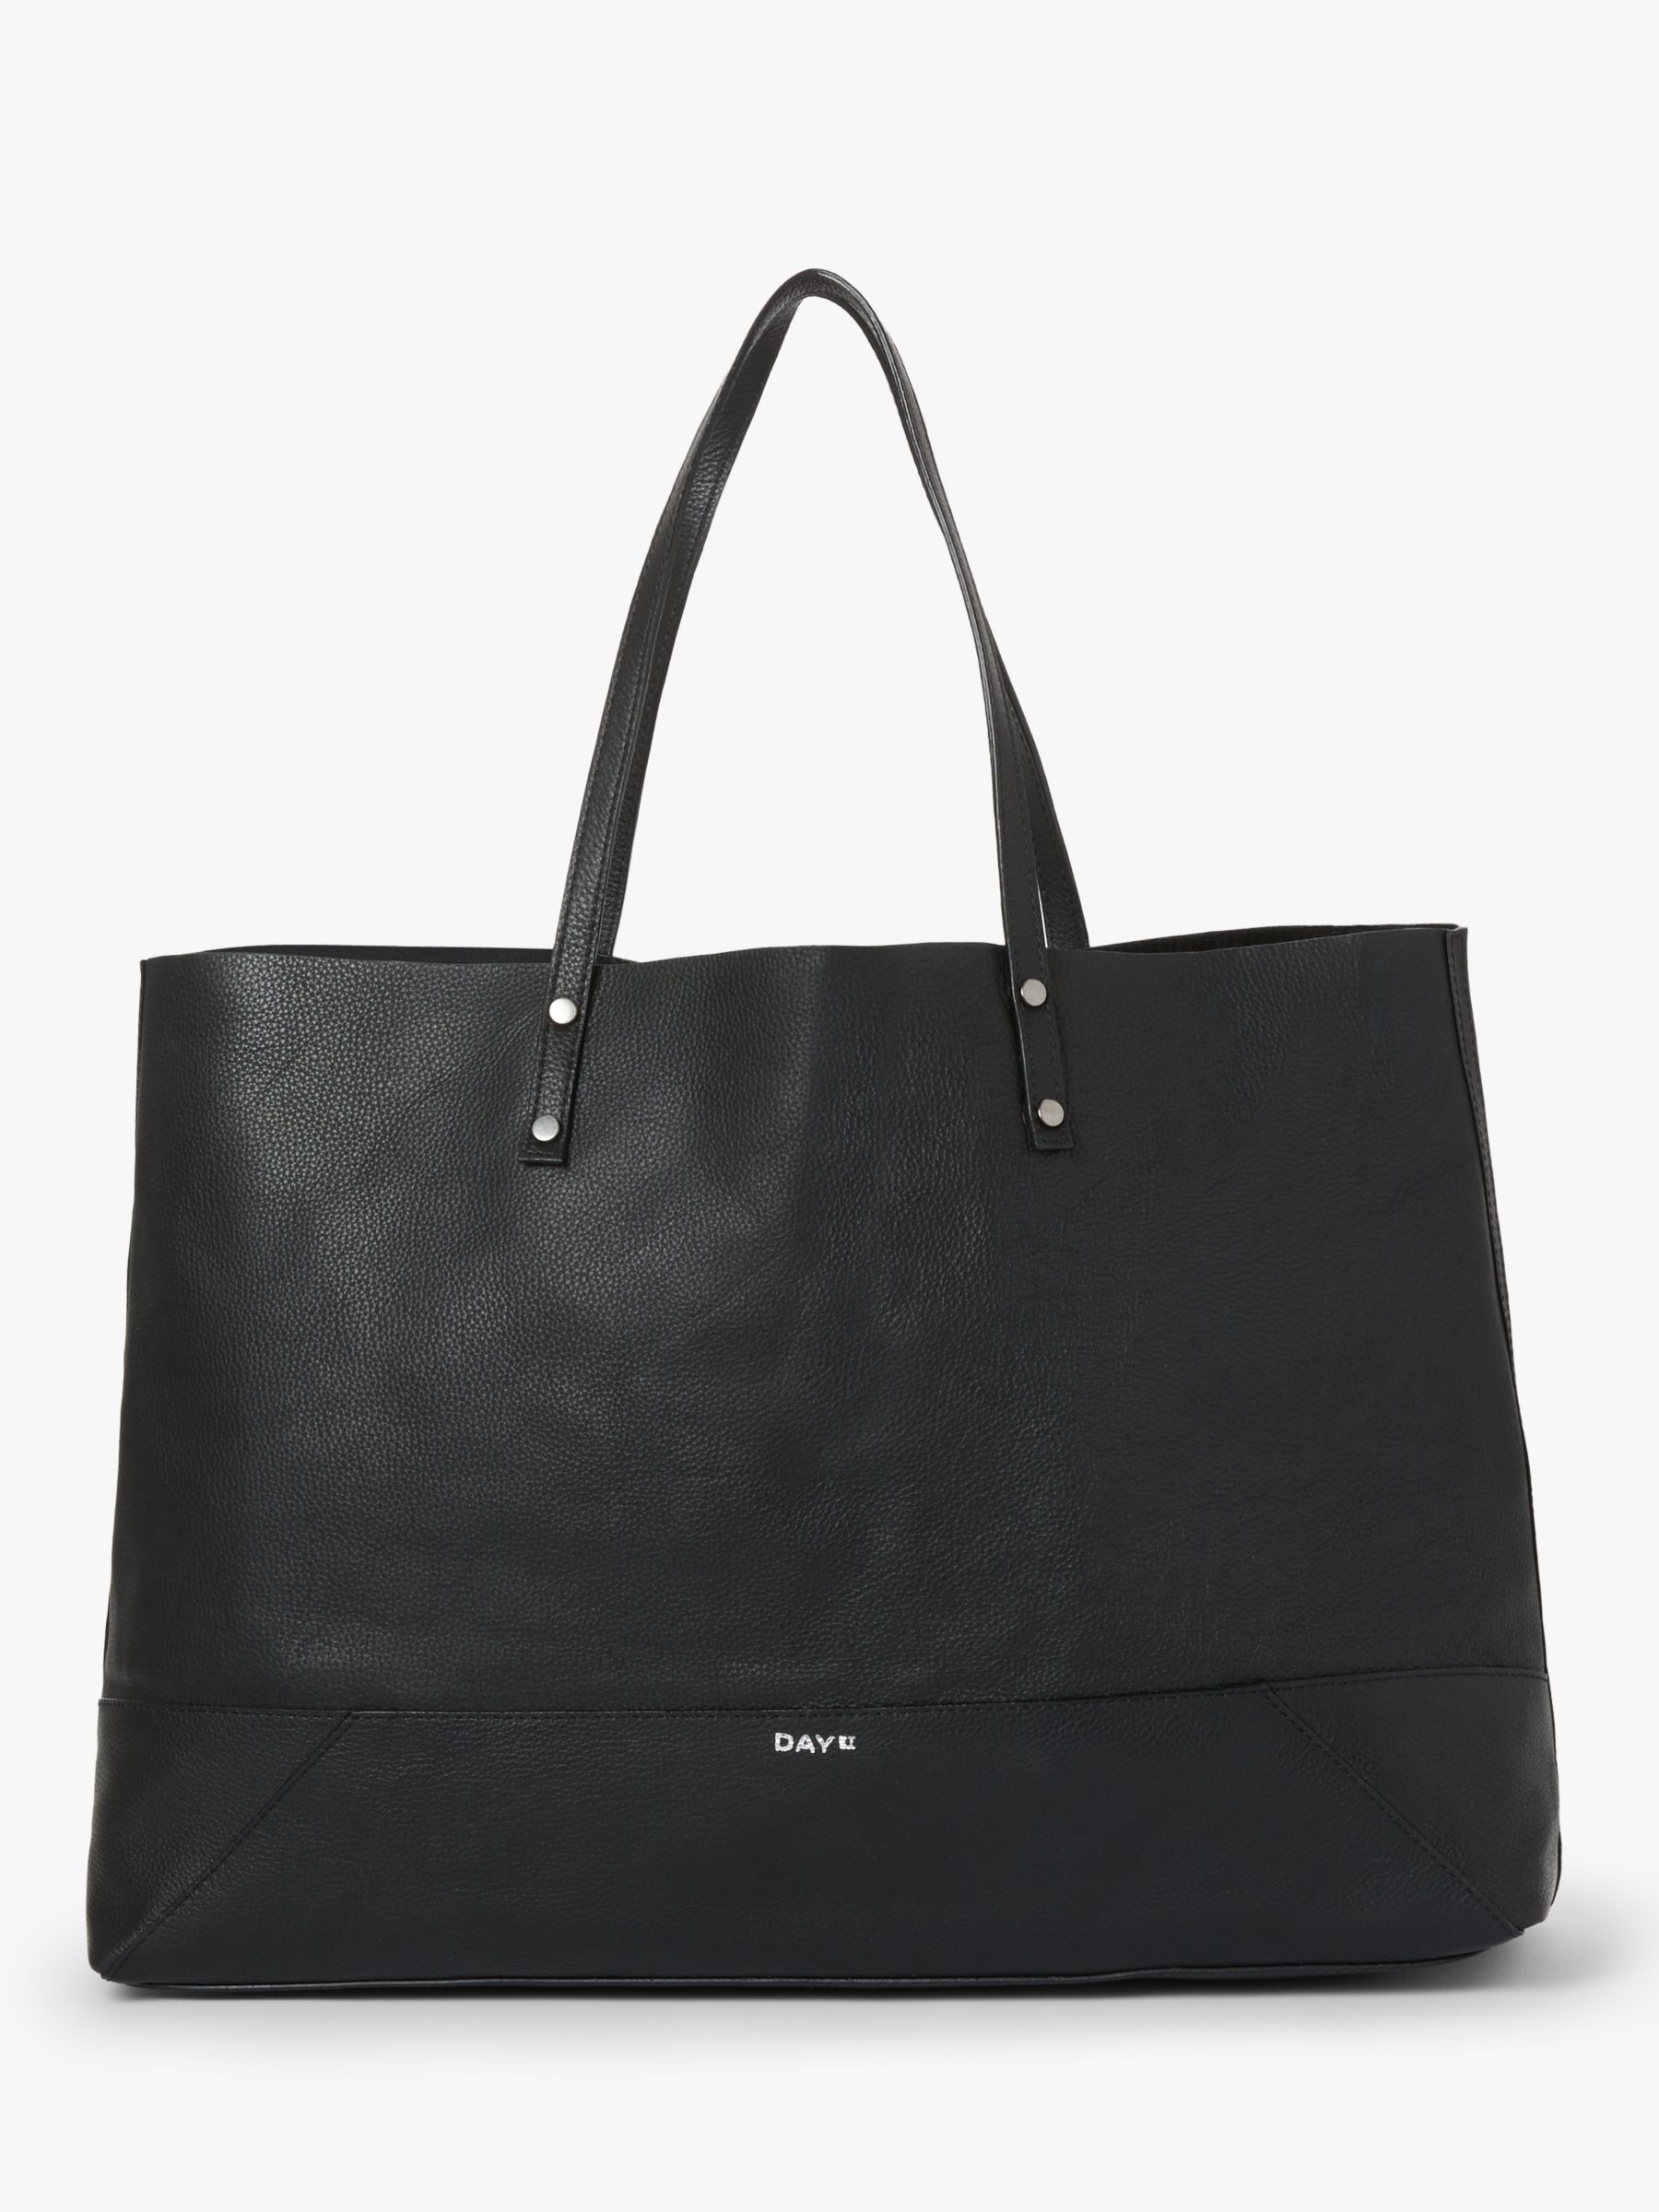 DAY et Shine Leather Shopper Bag, Black at John Lewis & Partners